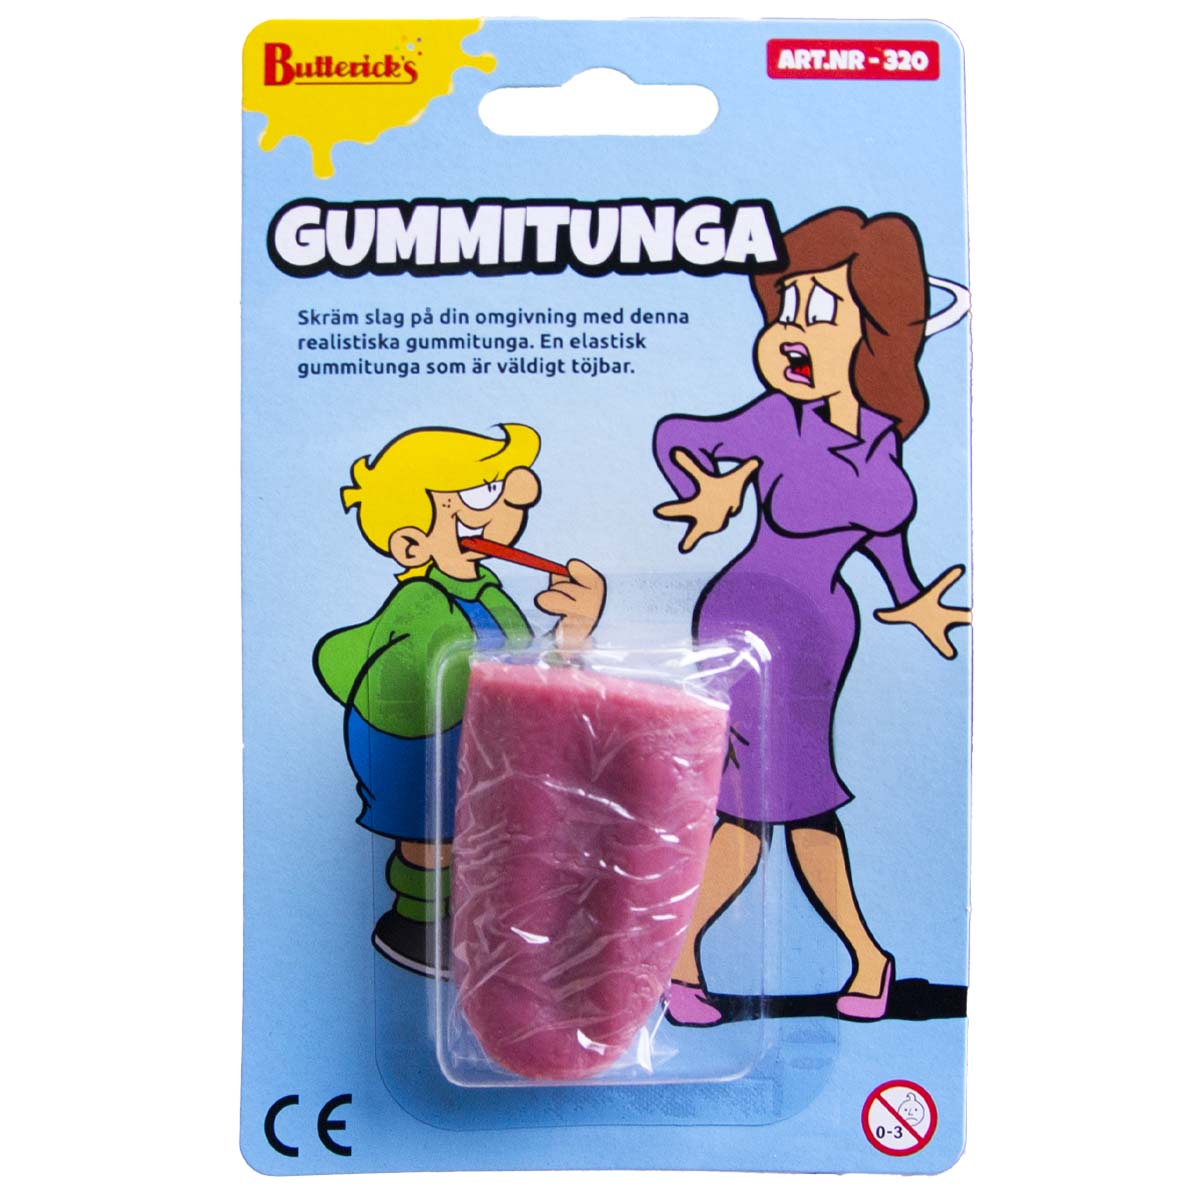 Läs mer om Gummitunga